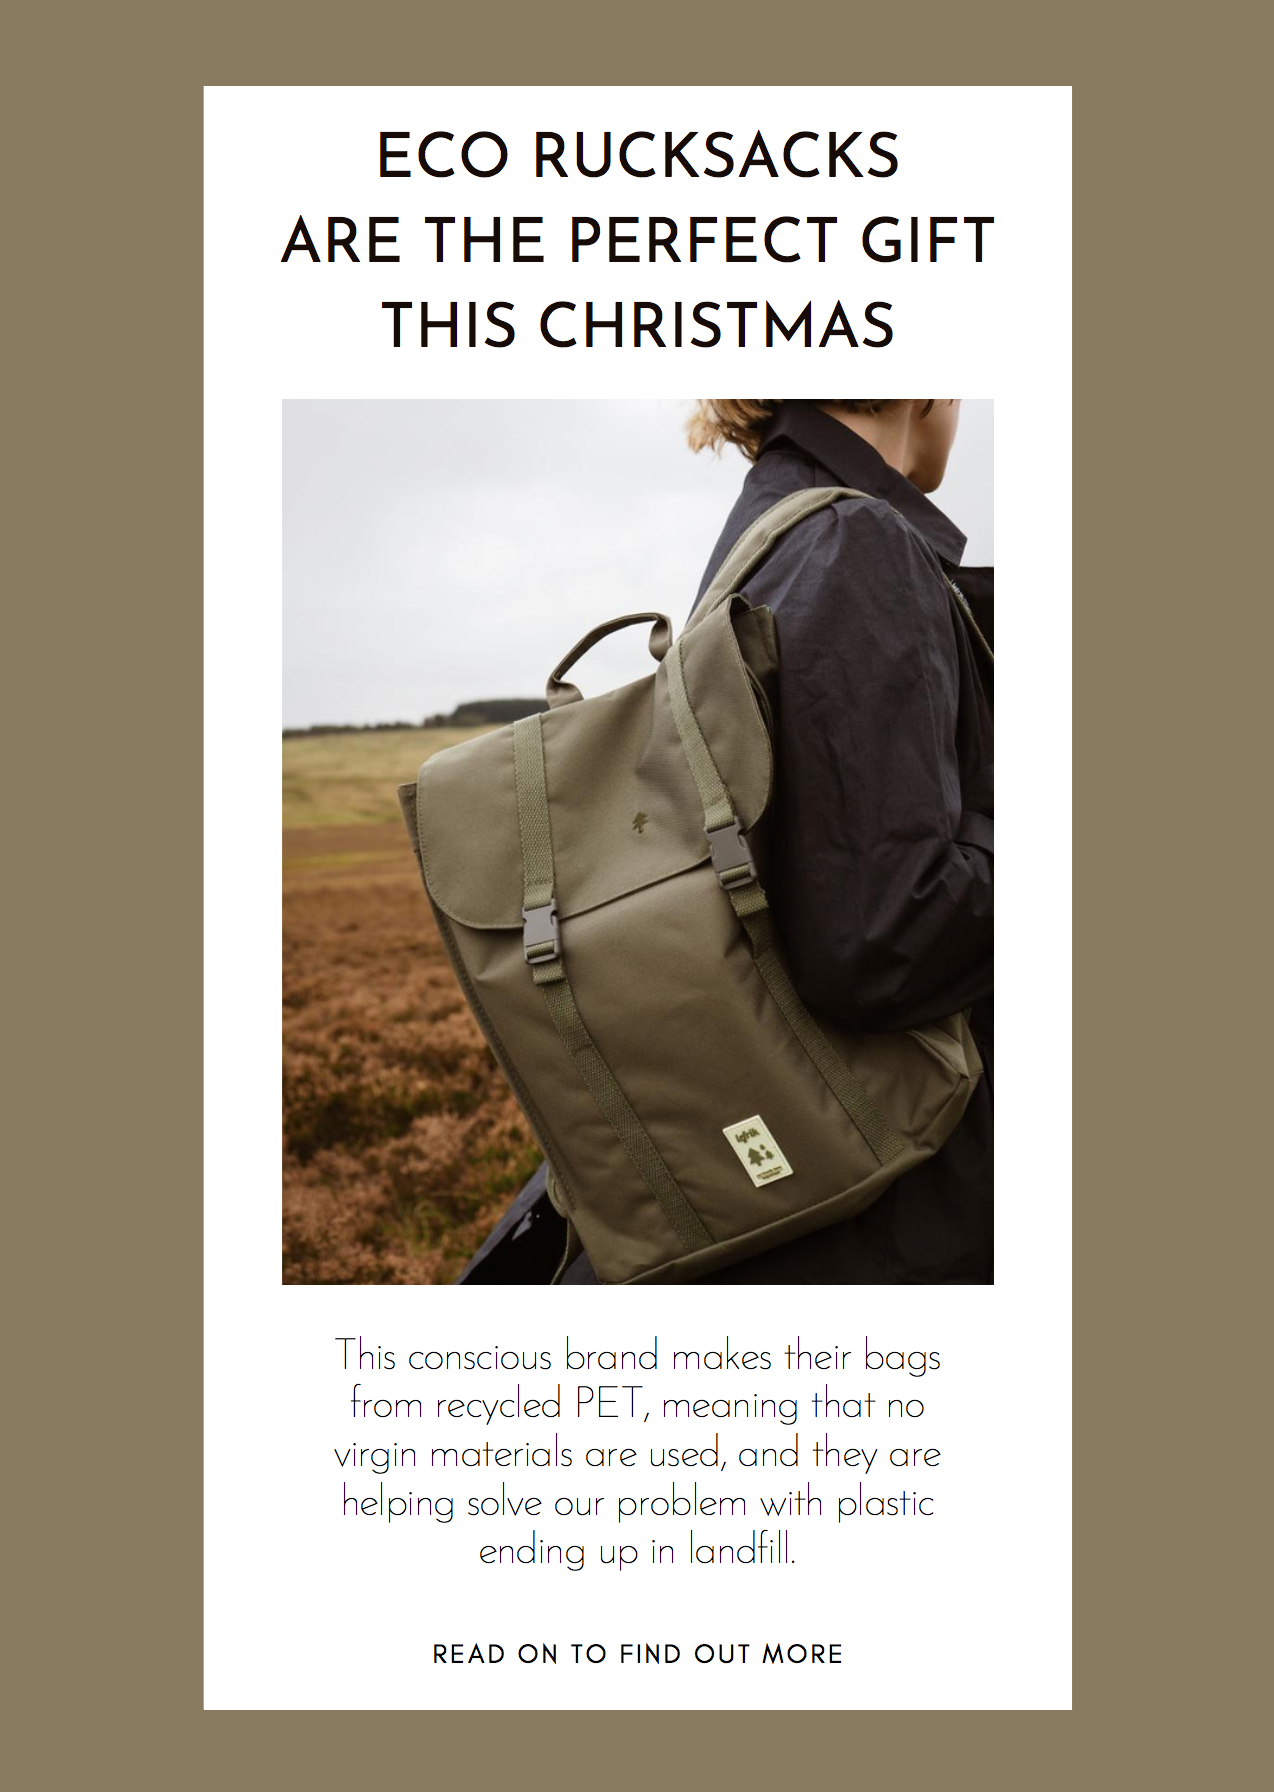 Eco rucksacks are the perfect gift this Christmas